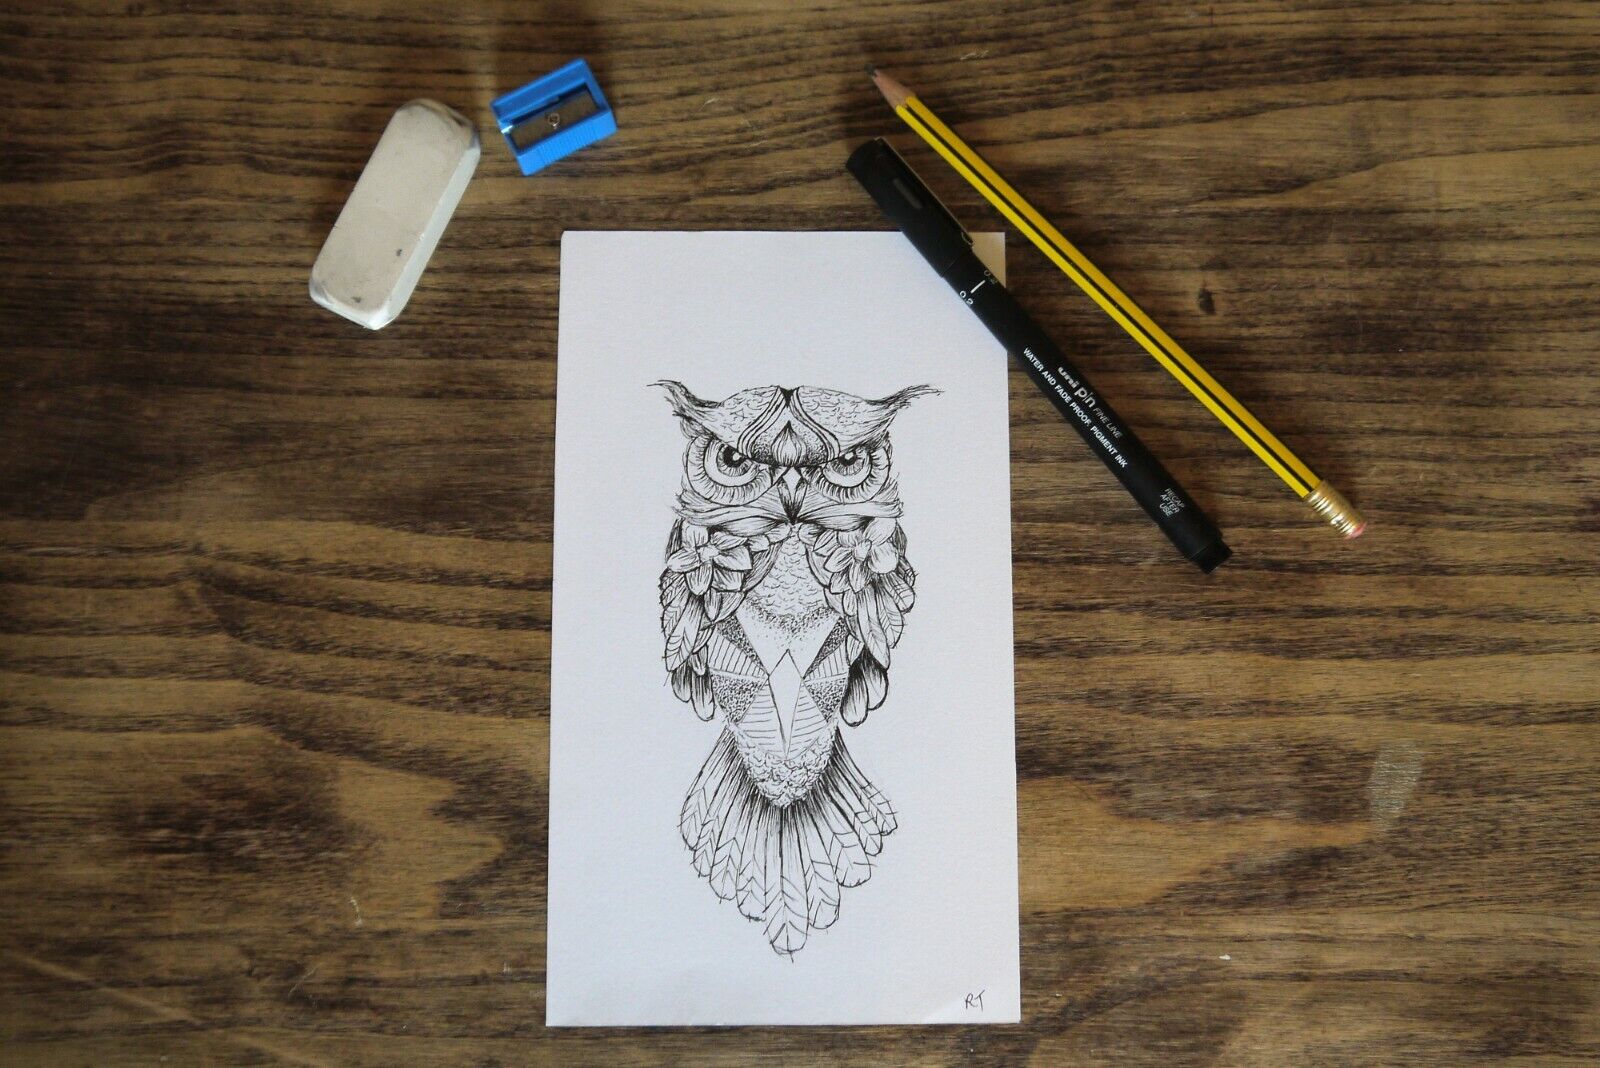 Original Art, Owl Pen and Ink Drawing, Tattoo Style Illustration | eBay